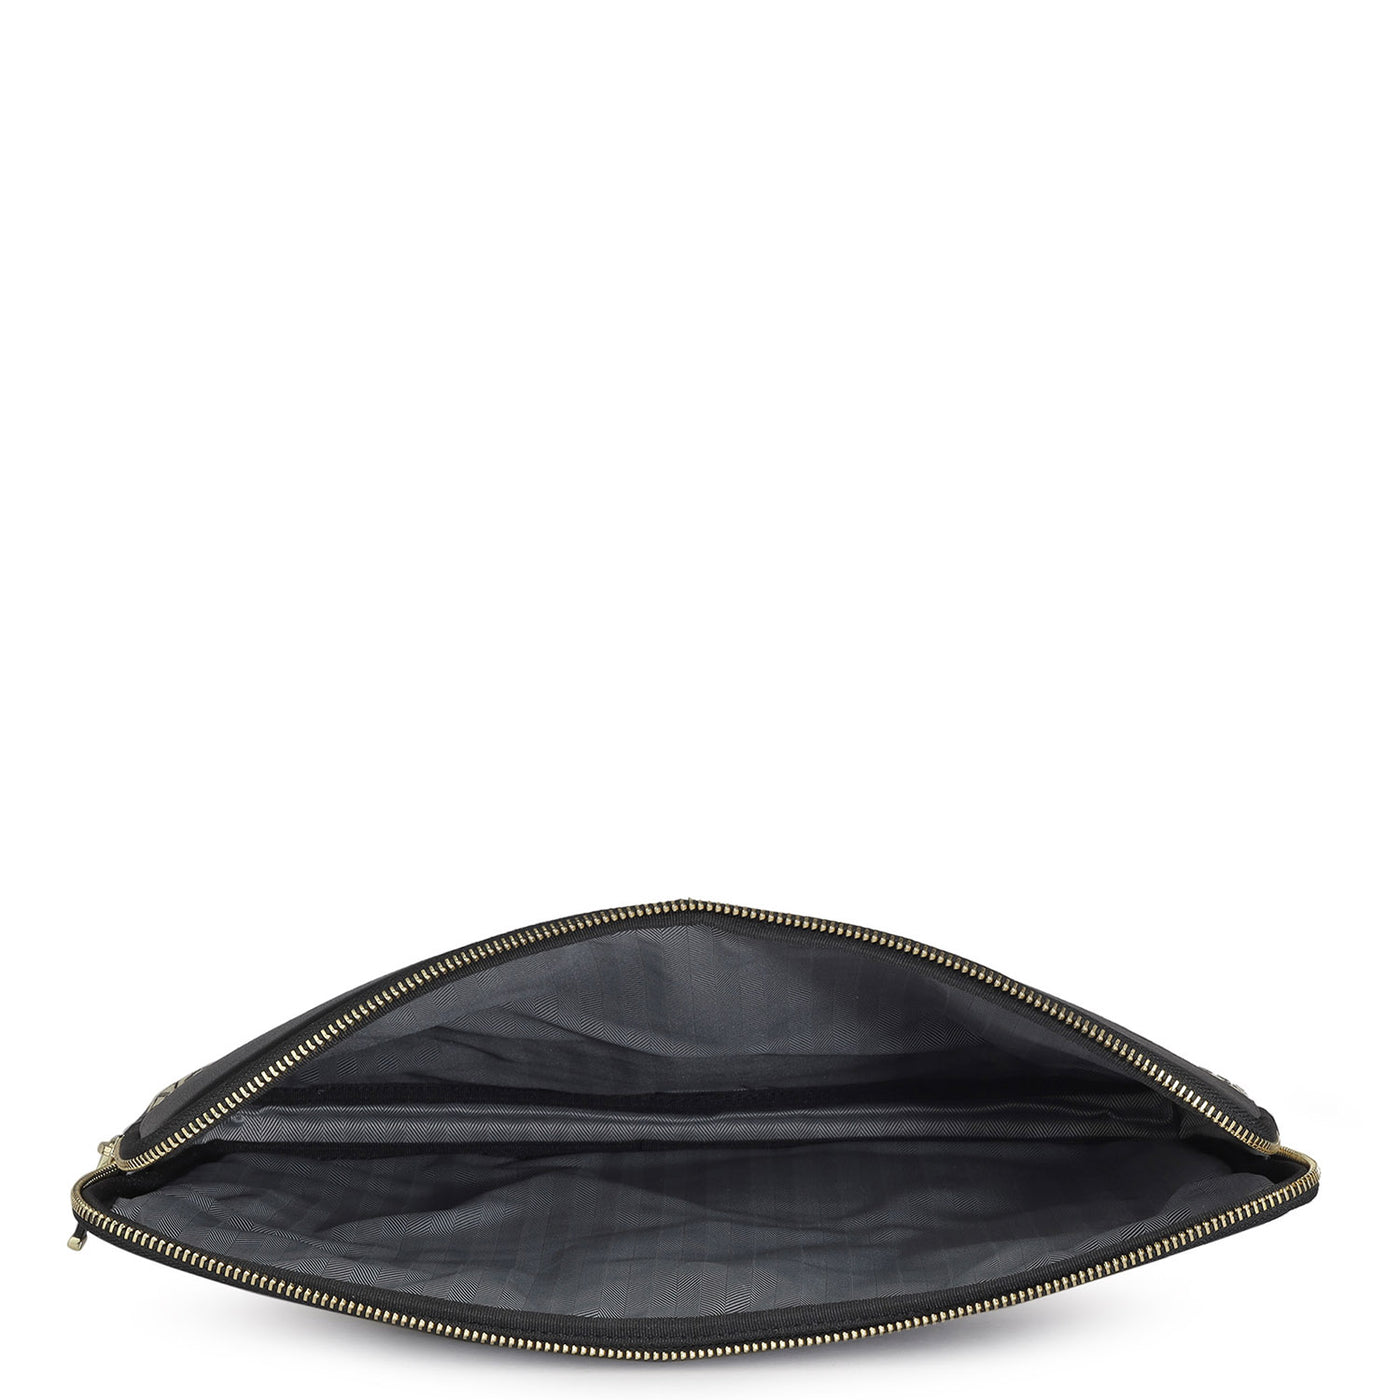 Beige & Black Canvas Leather Laptop Sleeve - Upto 14"